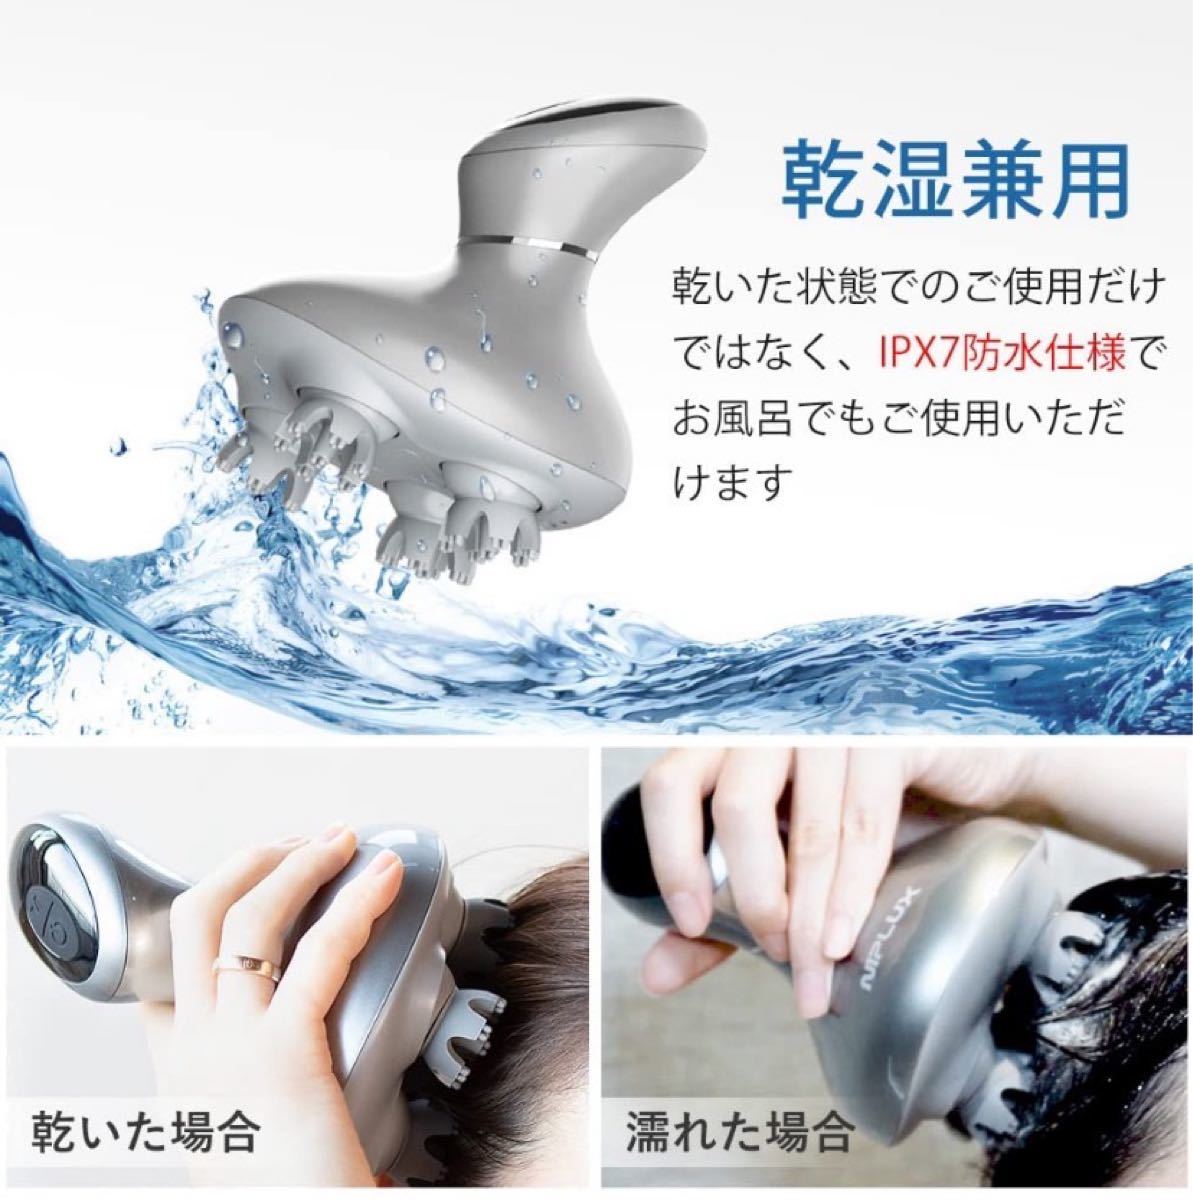 NIPLUX HEAD SPA 電動頭皮ブラシ 株式会社日創プラス ニップラックス ヘッドスパ IPX7防水 3D振動 乾湿両用